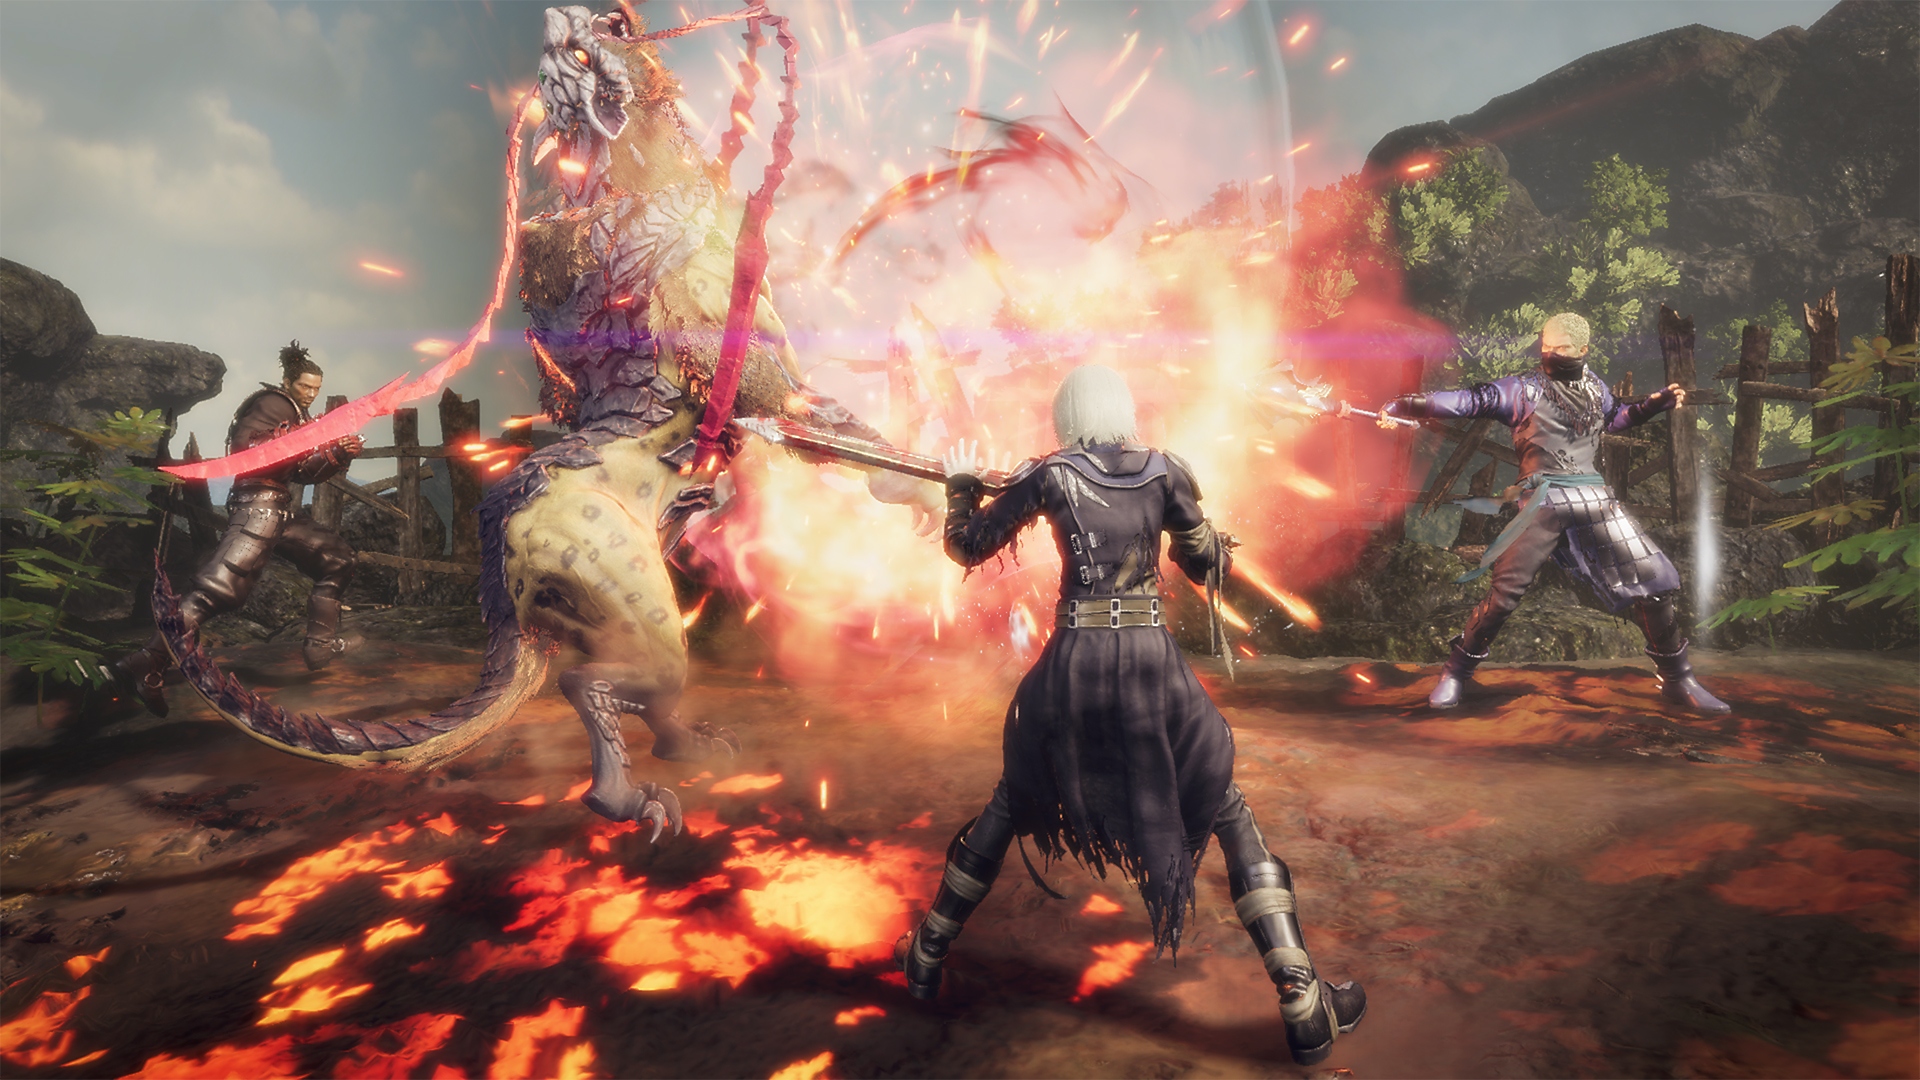 Captura de pantalla de Stranger of Paradise: Final Fantasy Origin mostrando un combate